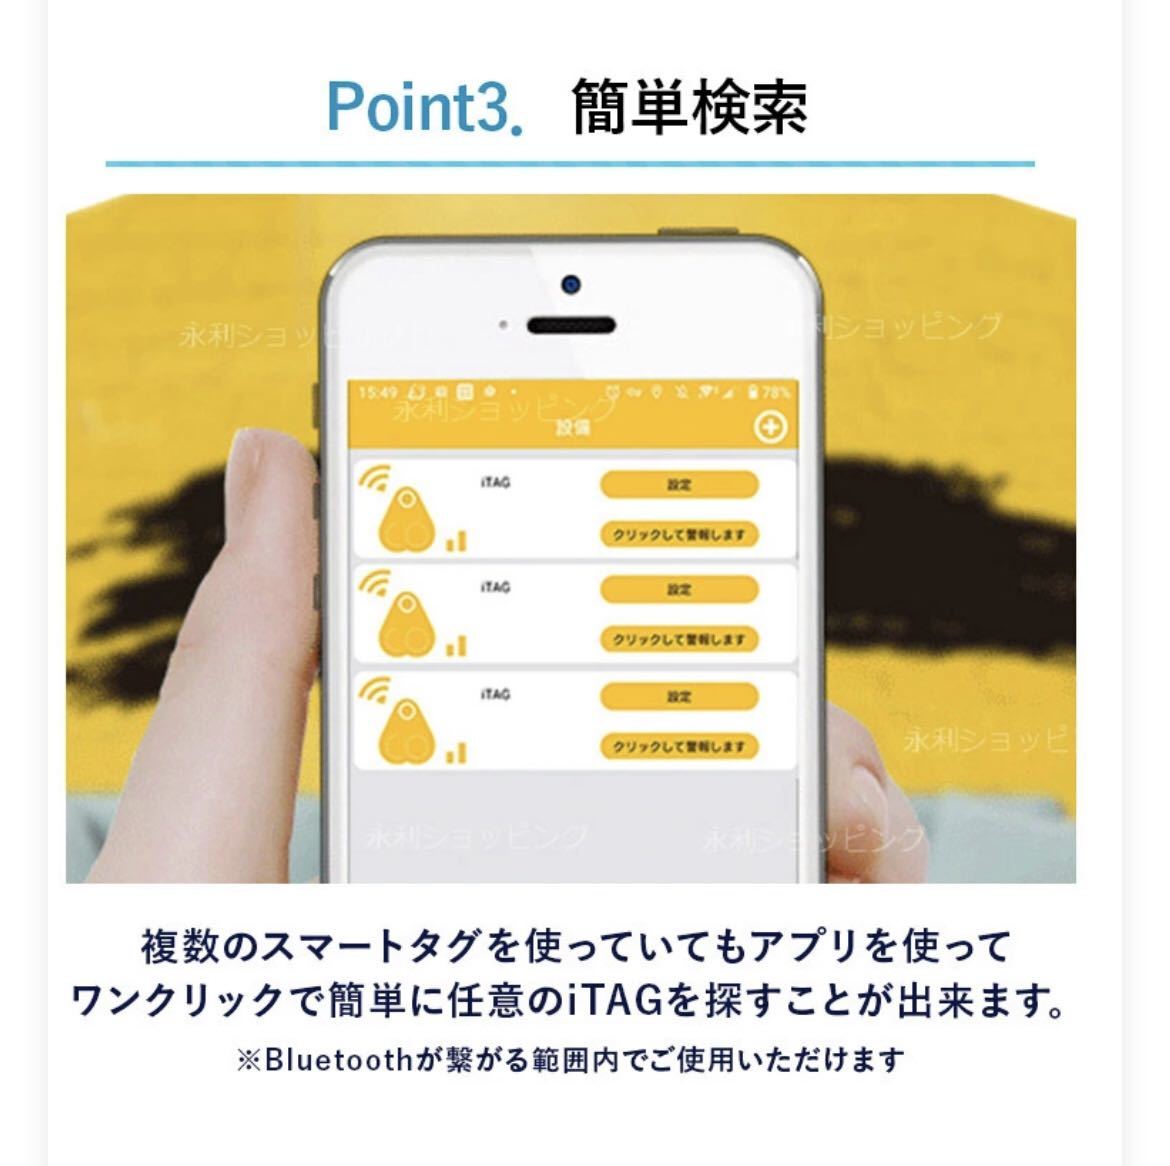 GPS発信機 トラッカー 家族追跡 盗難対策 ペット探し 迷子防止 追跡装置 紛失防止 日本語説明書 Bluetooth _画像8